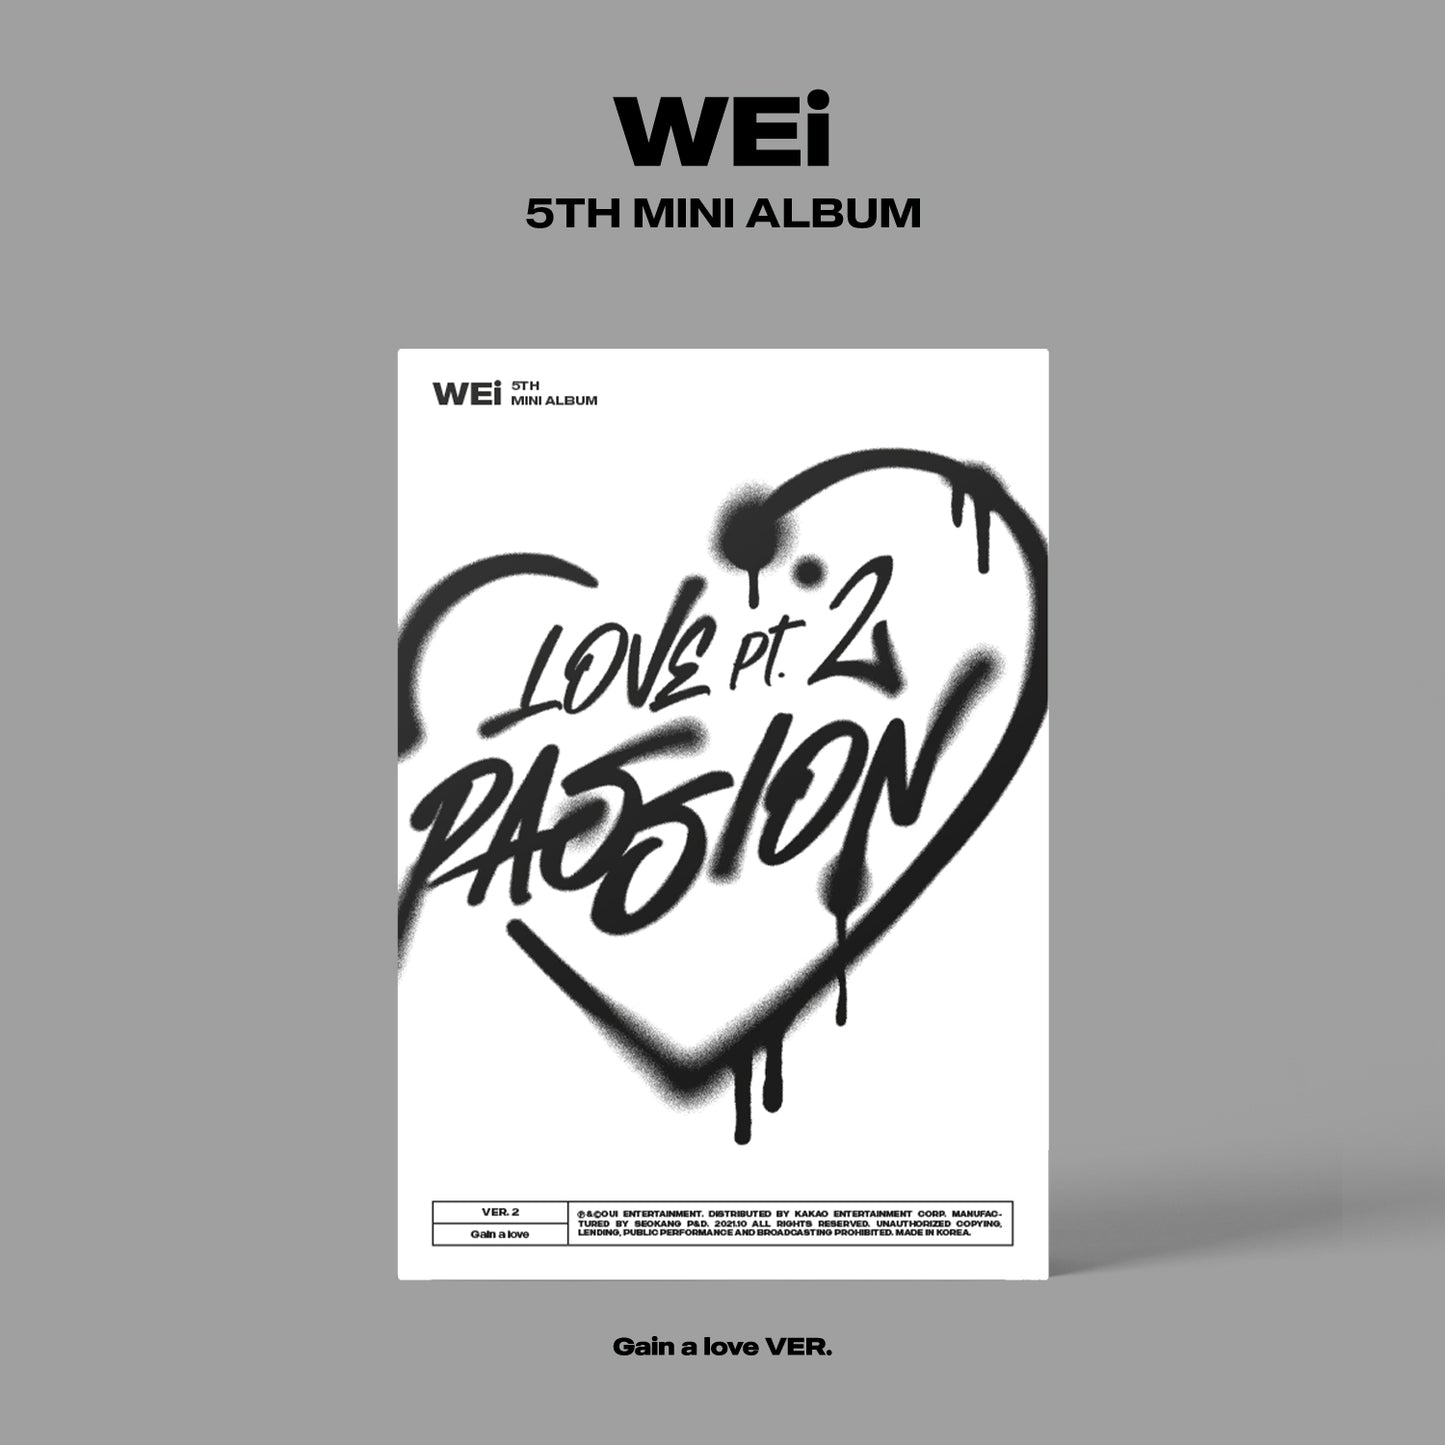 WEi - 5TH MINI ALBUM [LOVE PT.2 : PASSION] (3 VERSIONS)